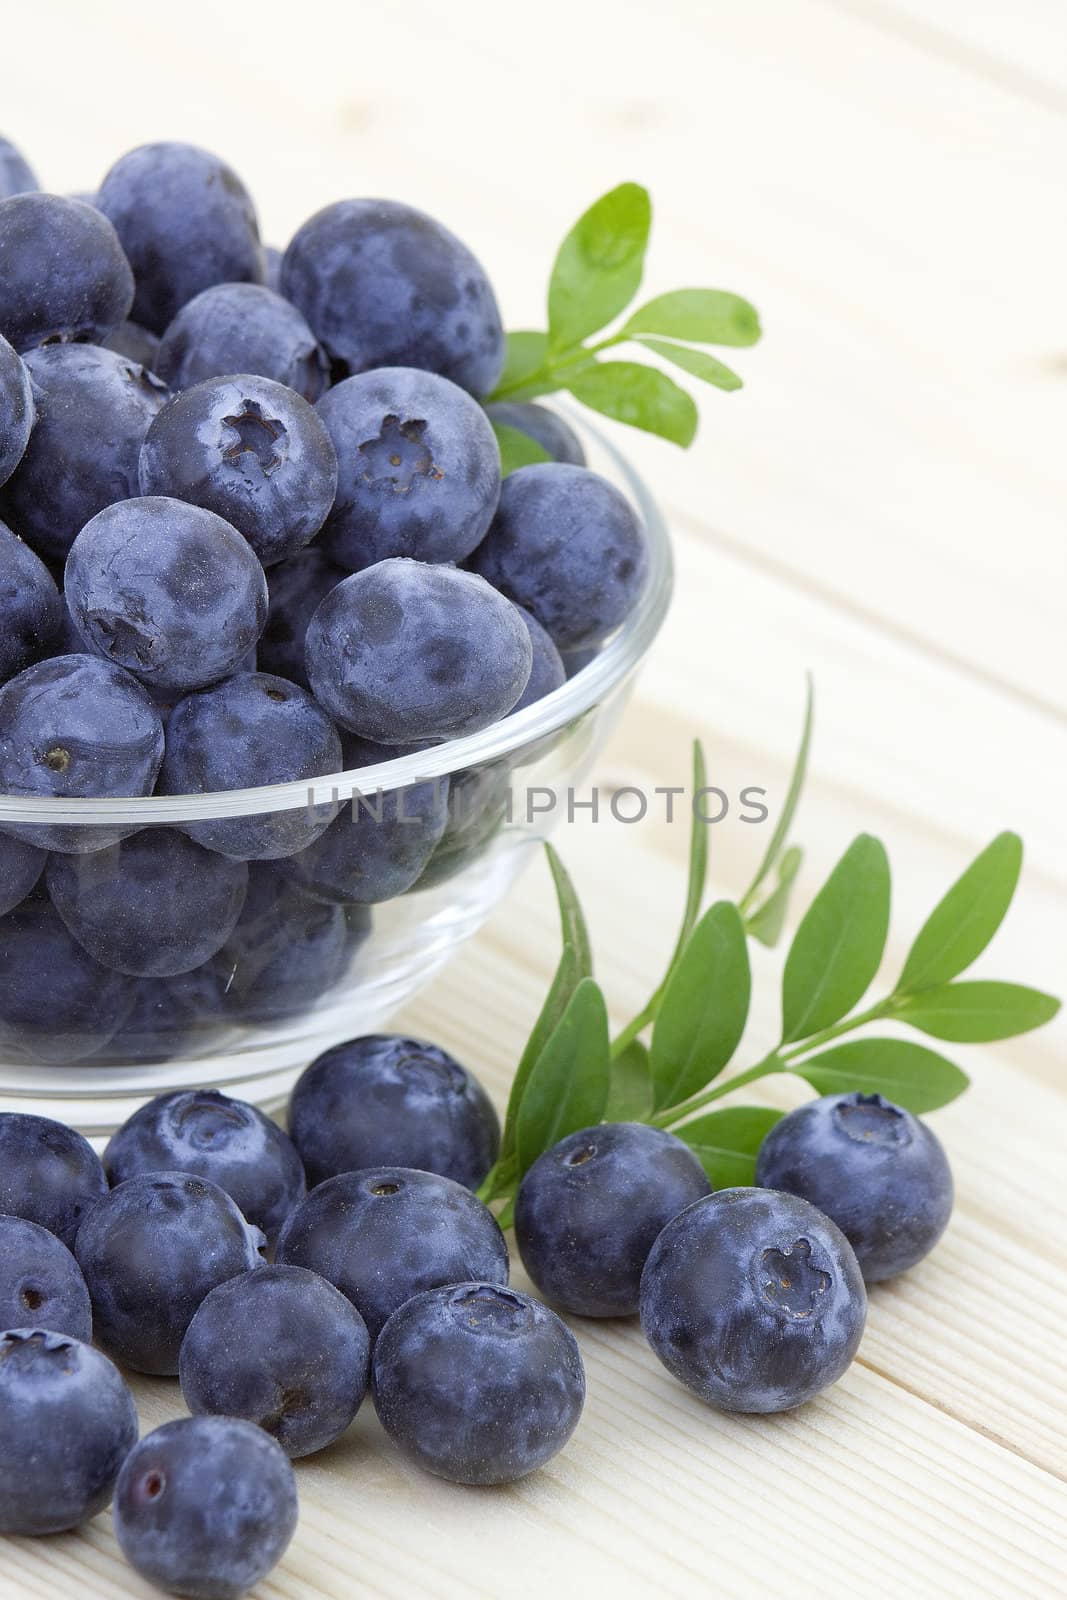 fresh blueberries in a bowl by miradrozdowski